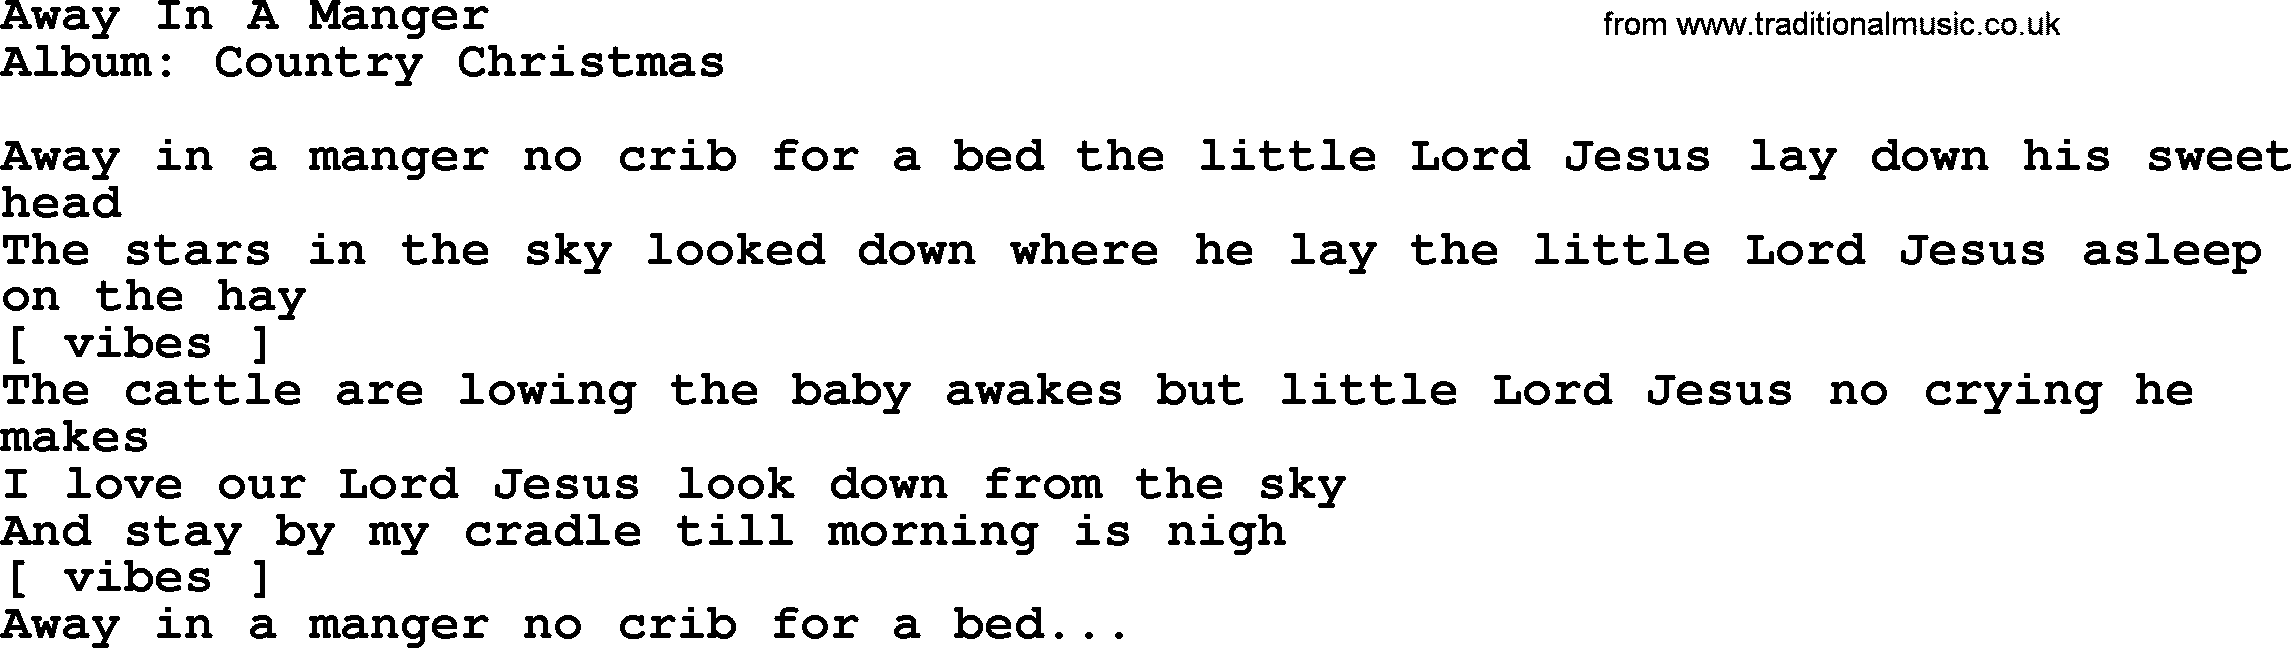 Loretta Lynn song: Away In A Manger lyrics